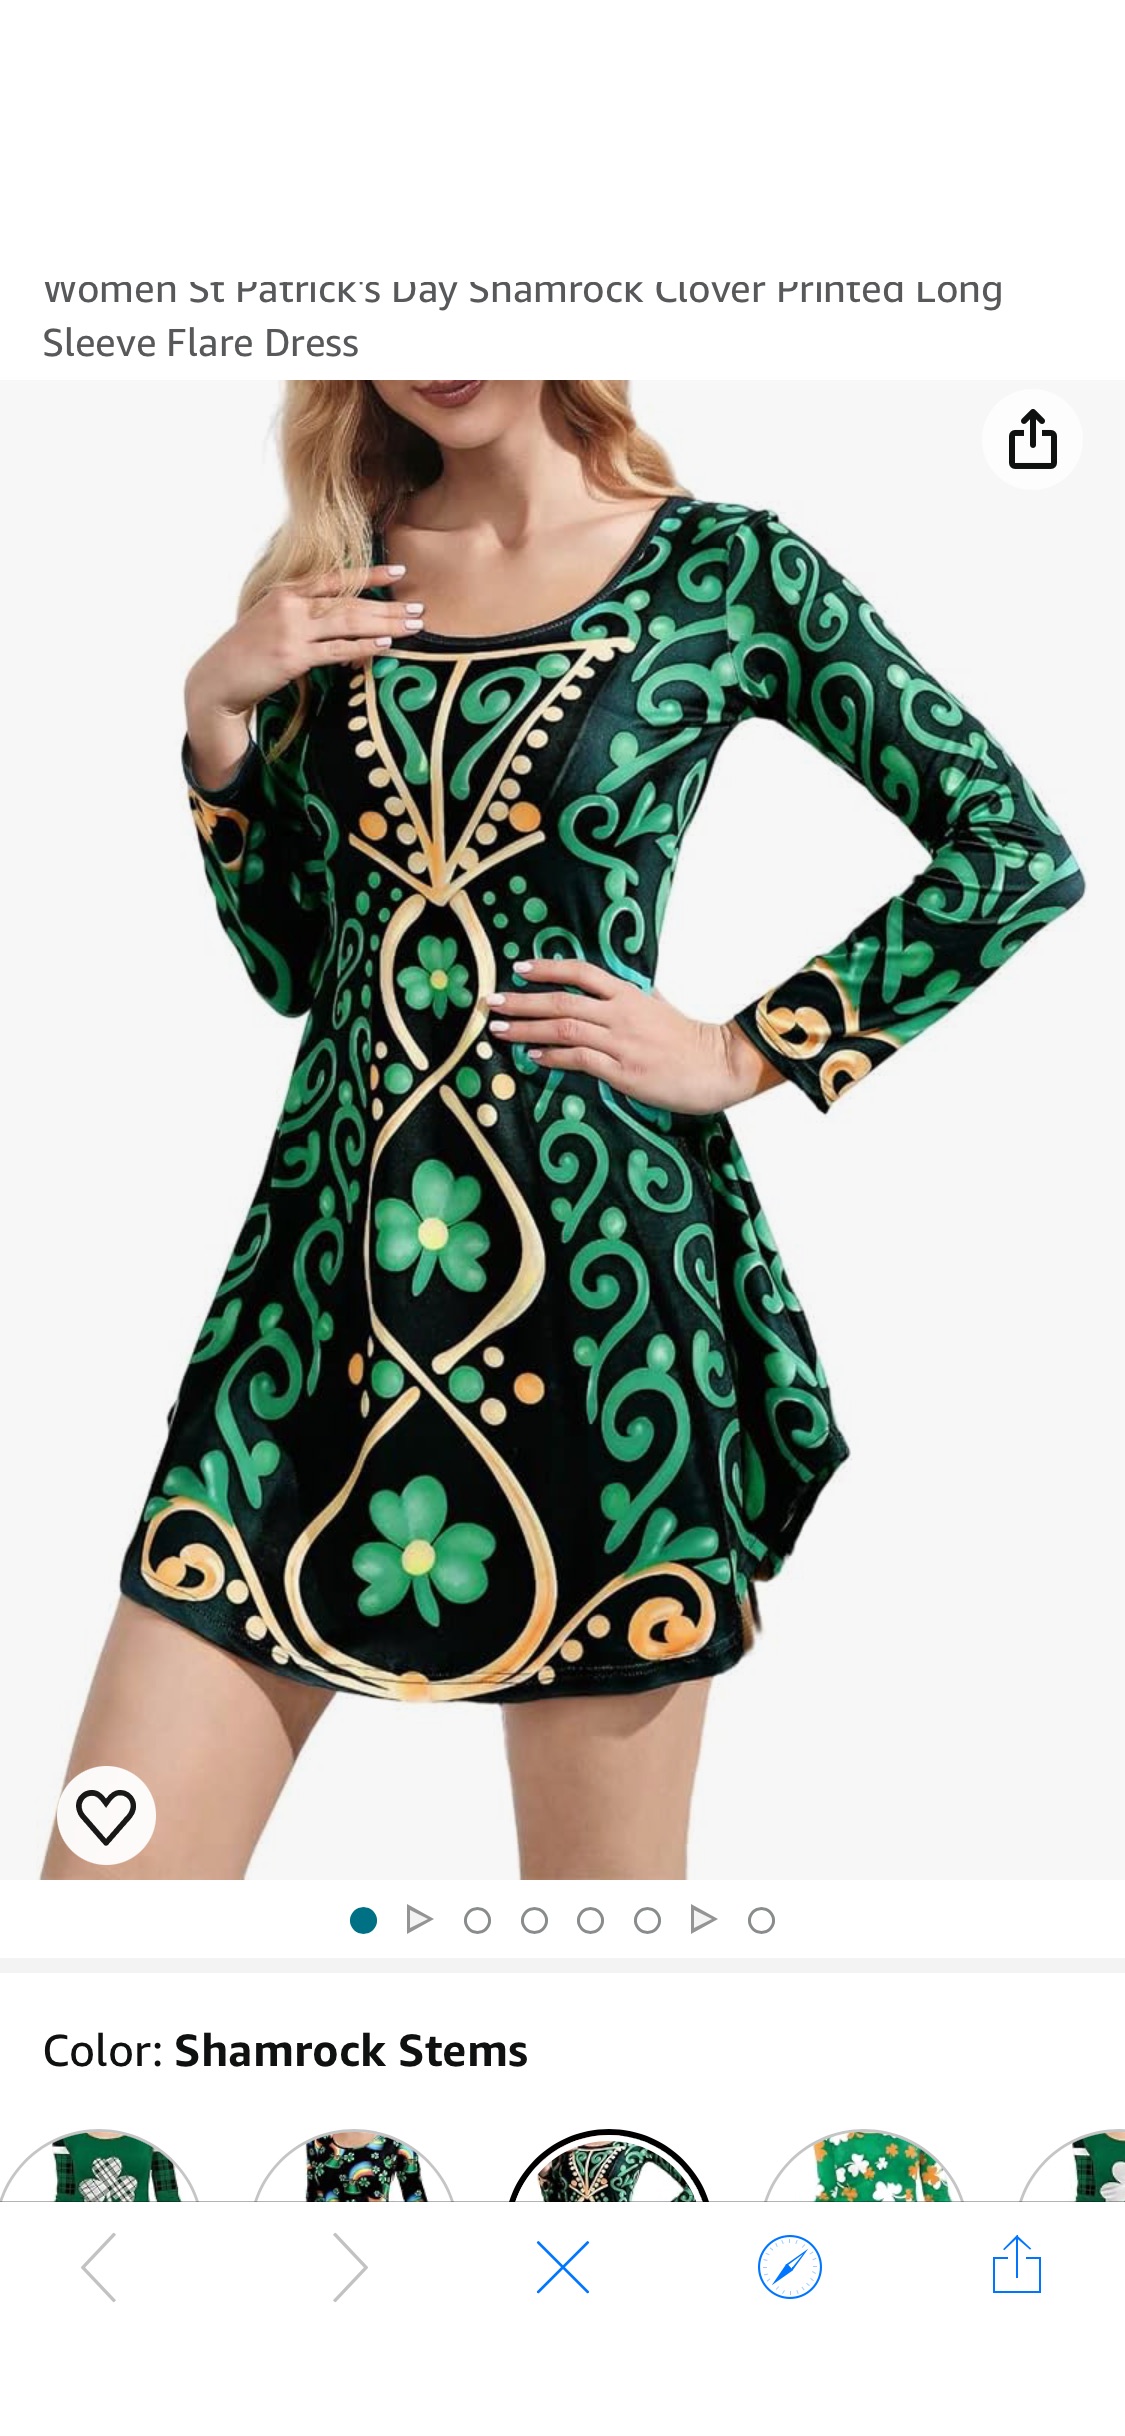 Amazon.com: Seizesoul Women St Patrick's Day Shamrock Clover Printed Long Sleeve Flare Dress Medium : Clothing, Shoes & Jewelry